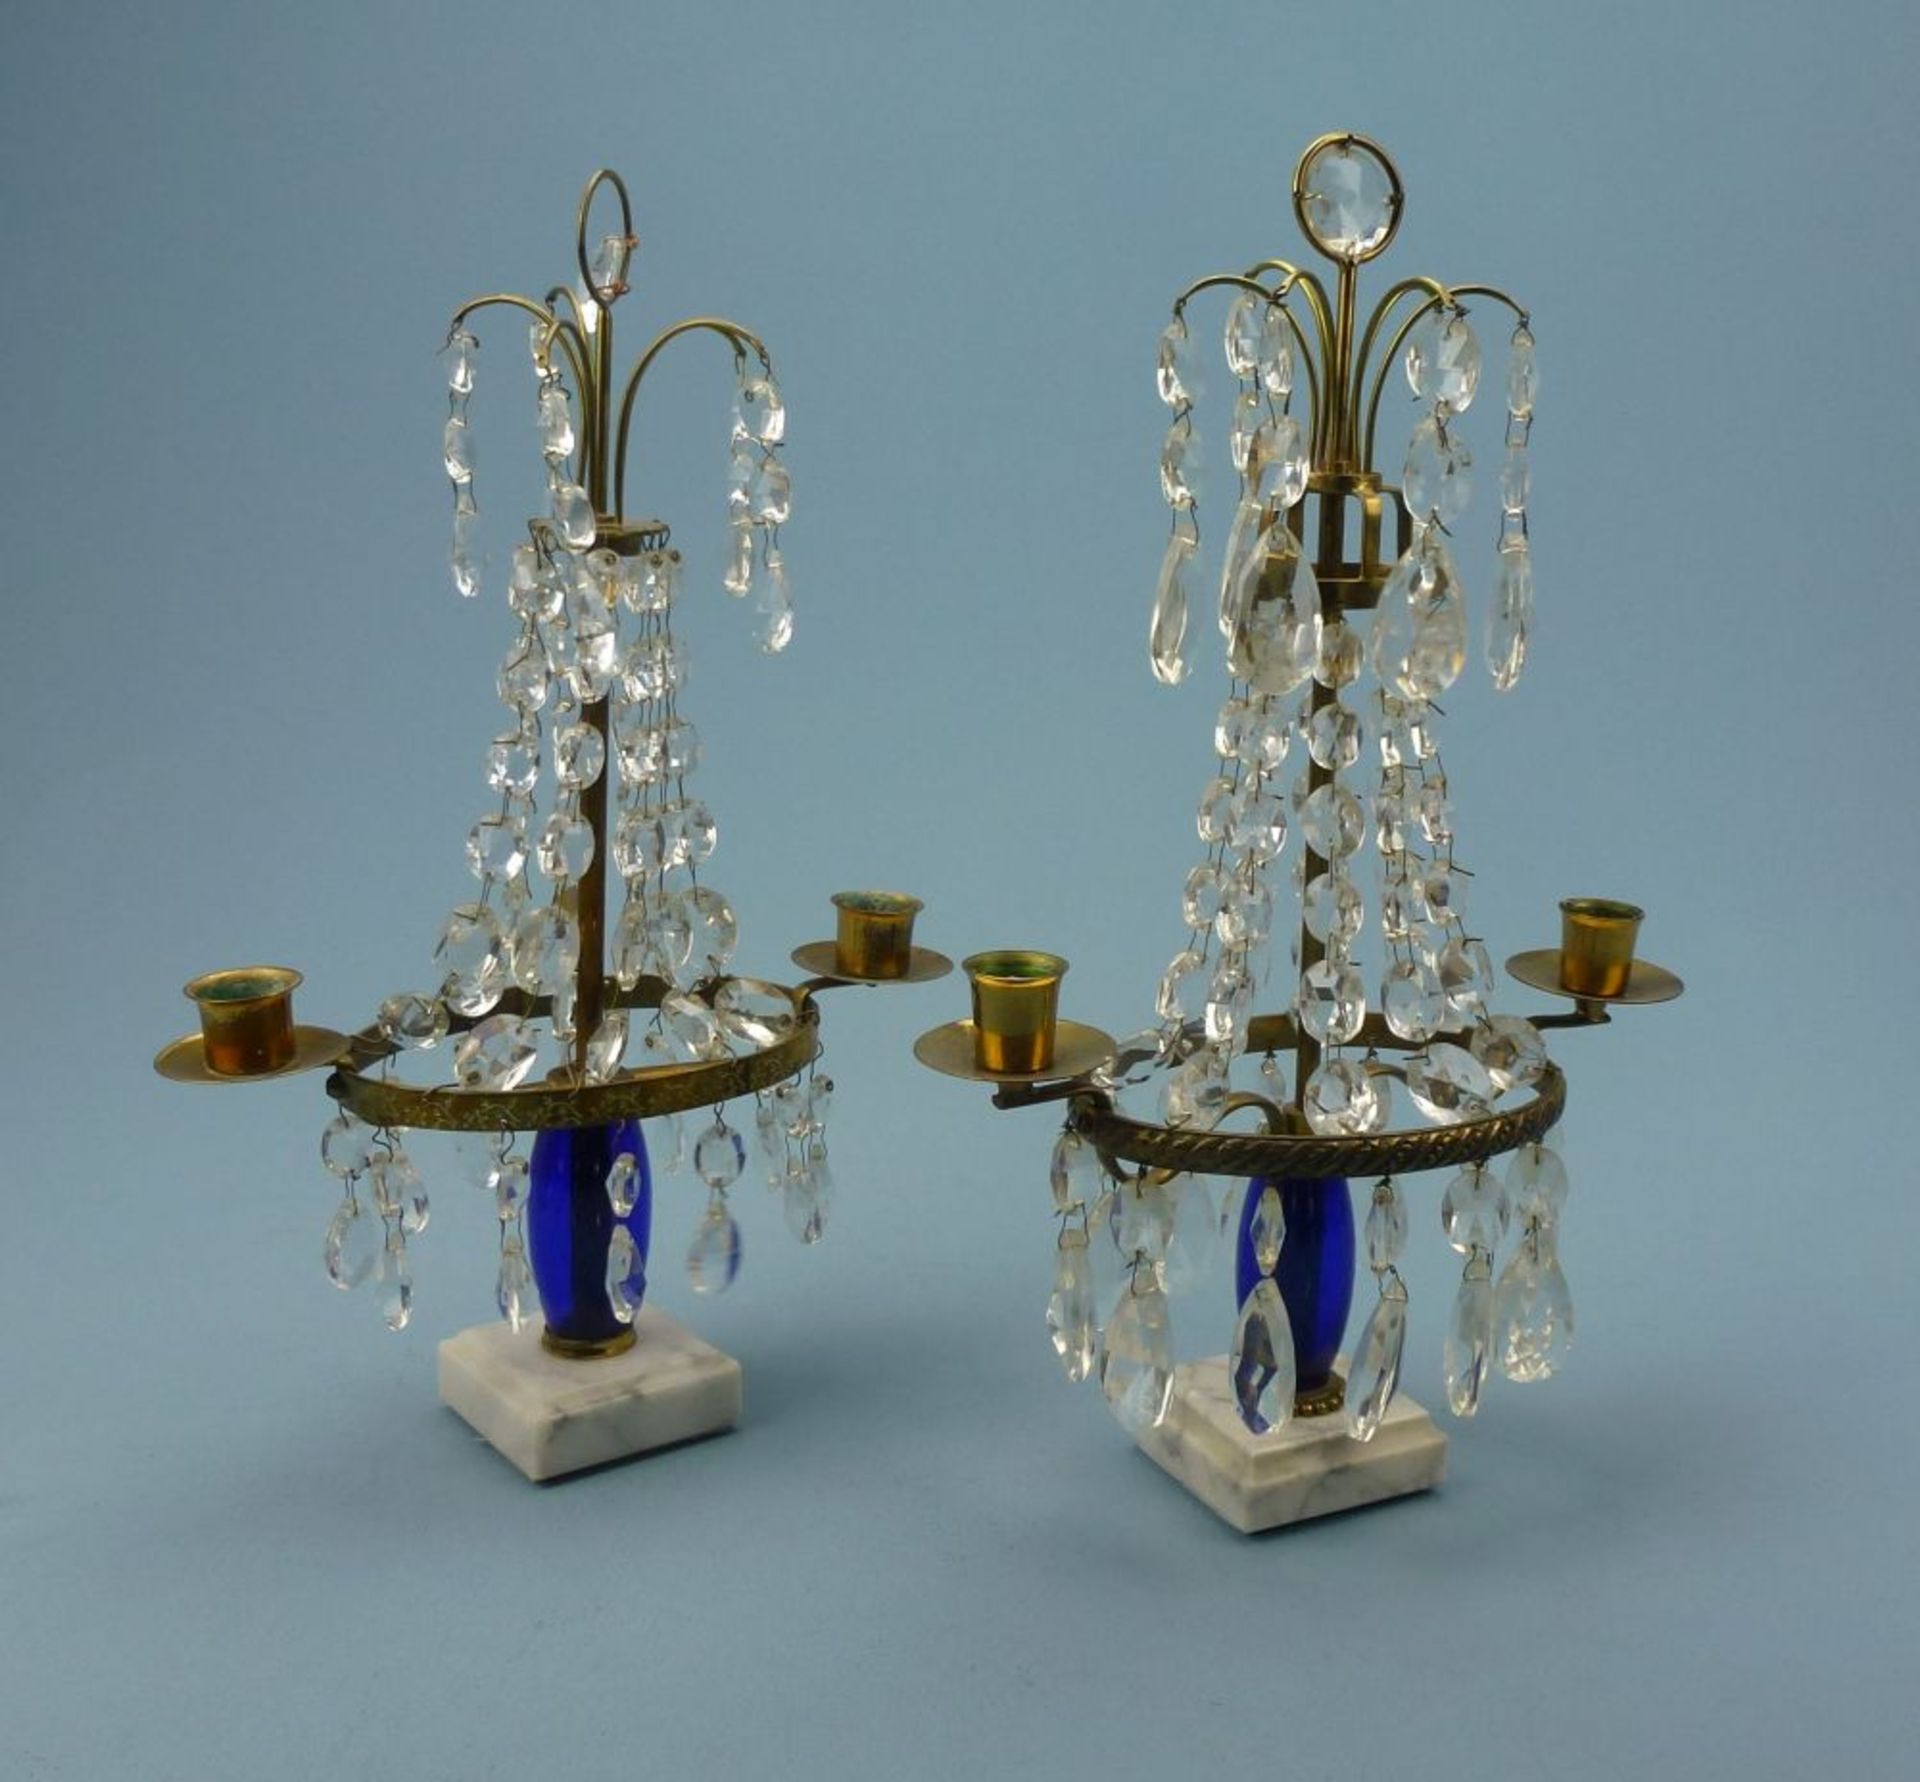 2 Tafel-Leuchter mit Kristall-Behang, SchwedenMarmor-Plinthe, dkl.blauer Glas-Baluster, ovaler Reif,